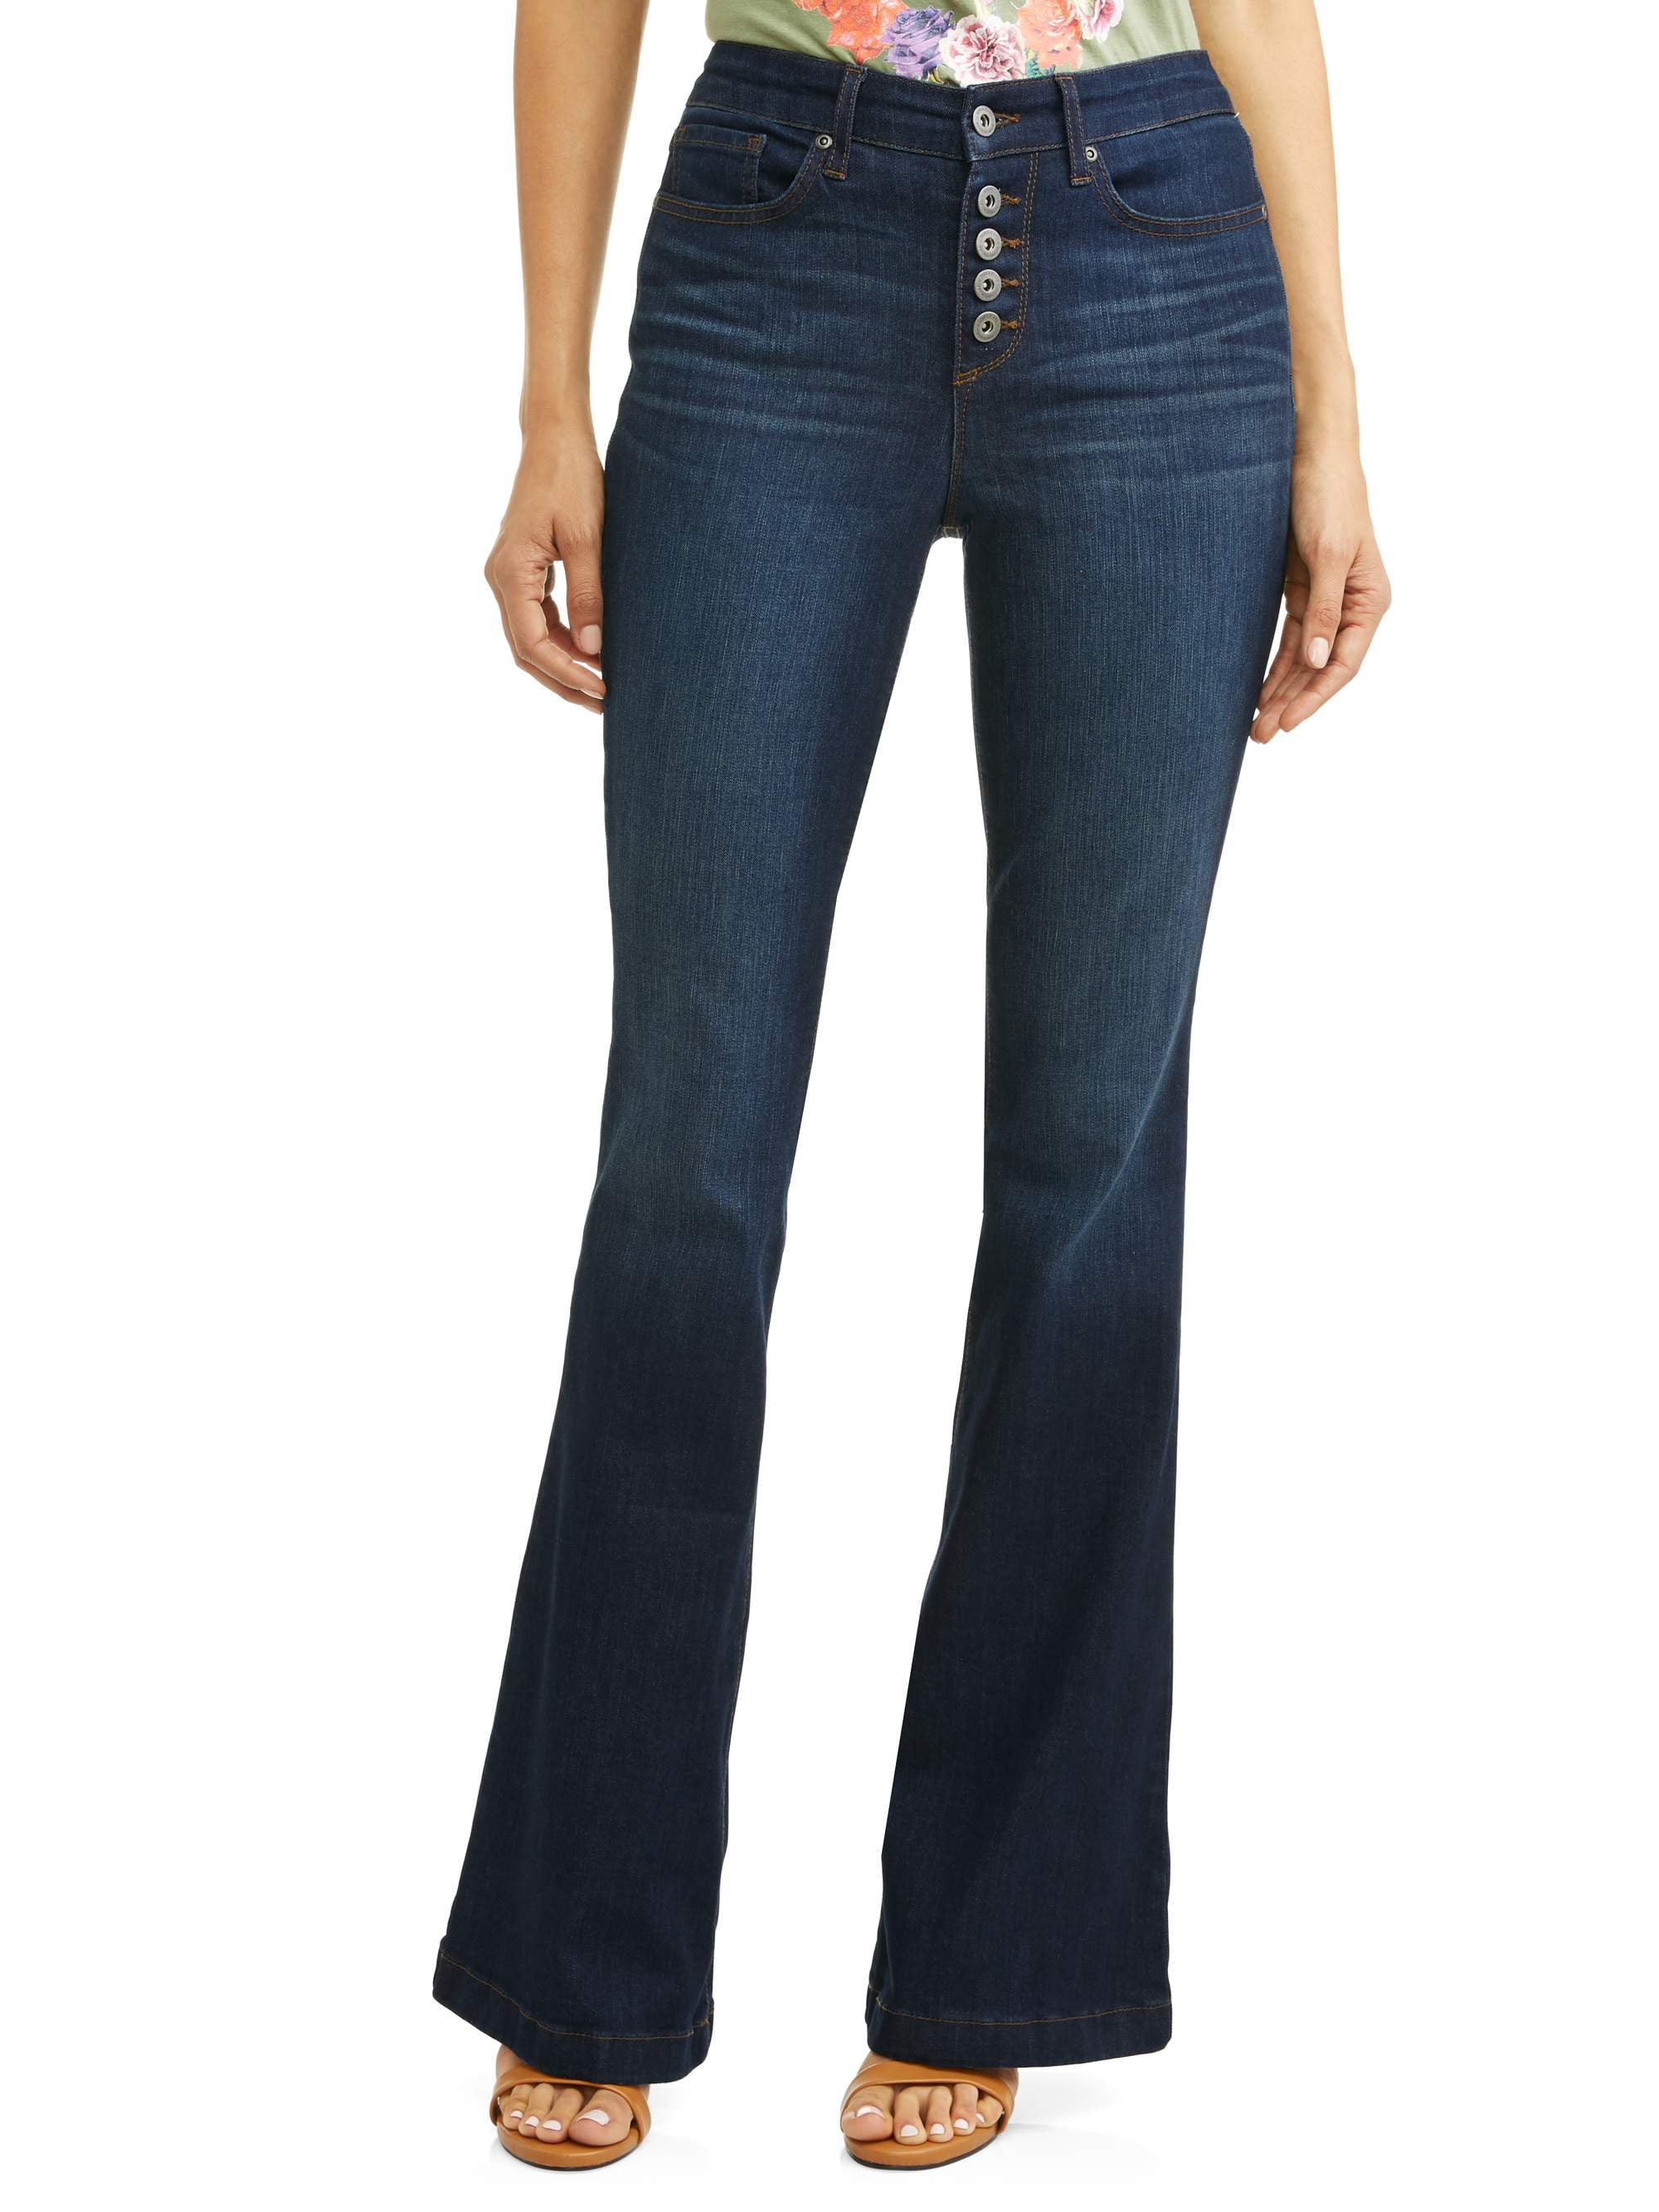 Sofia Jeans Women's Melisa Flare High Rise Jeans - Walmart.com